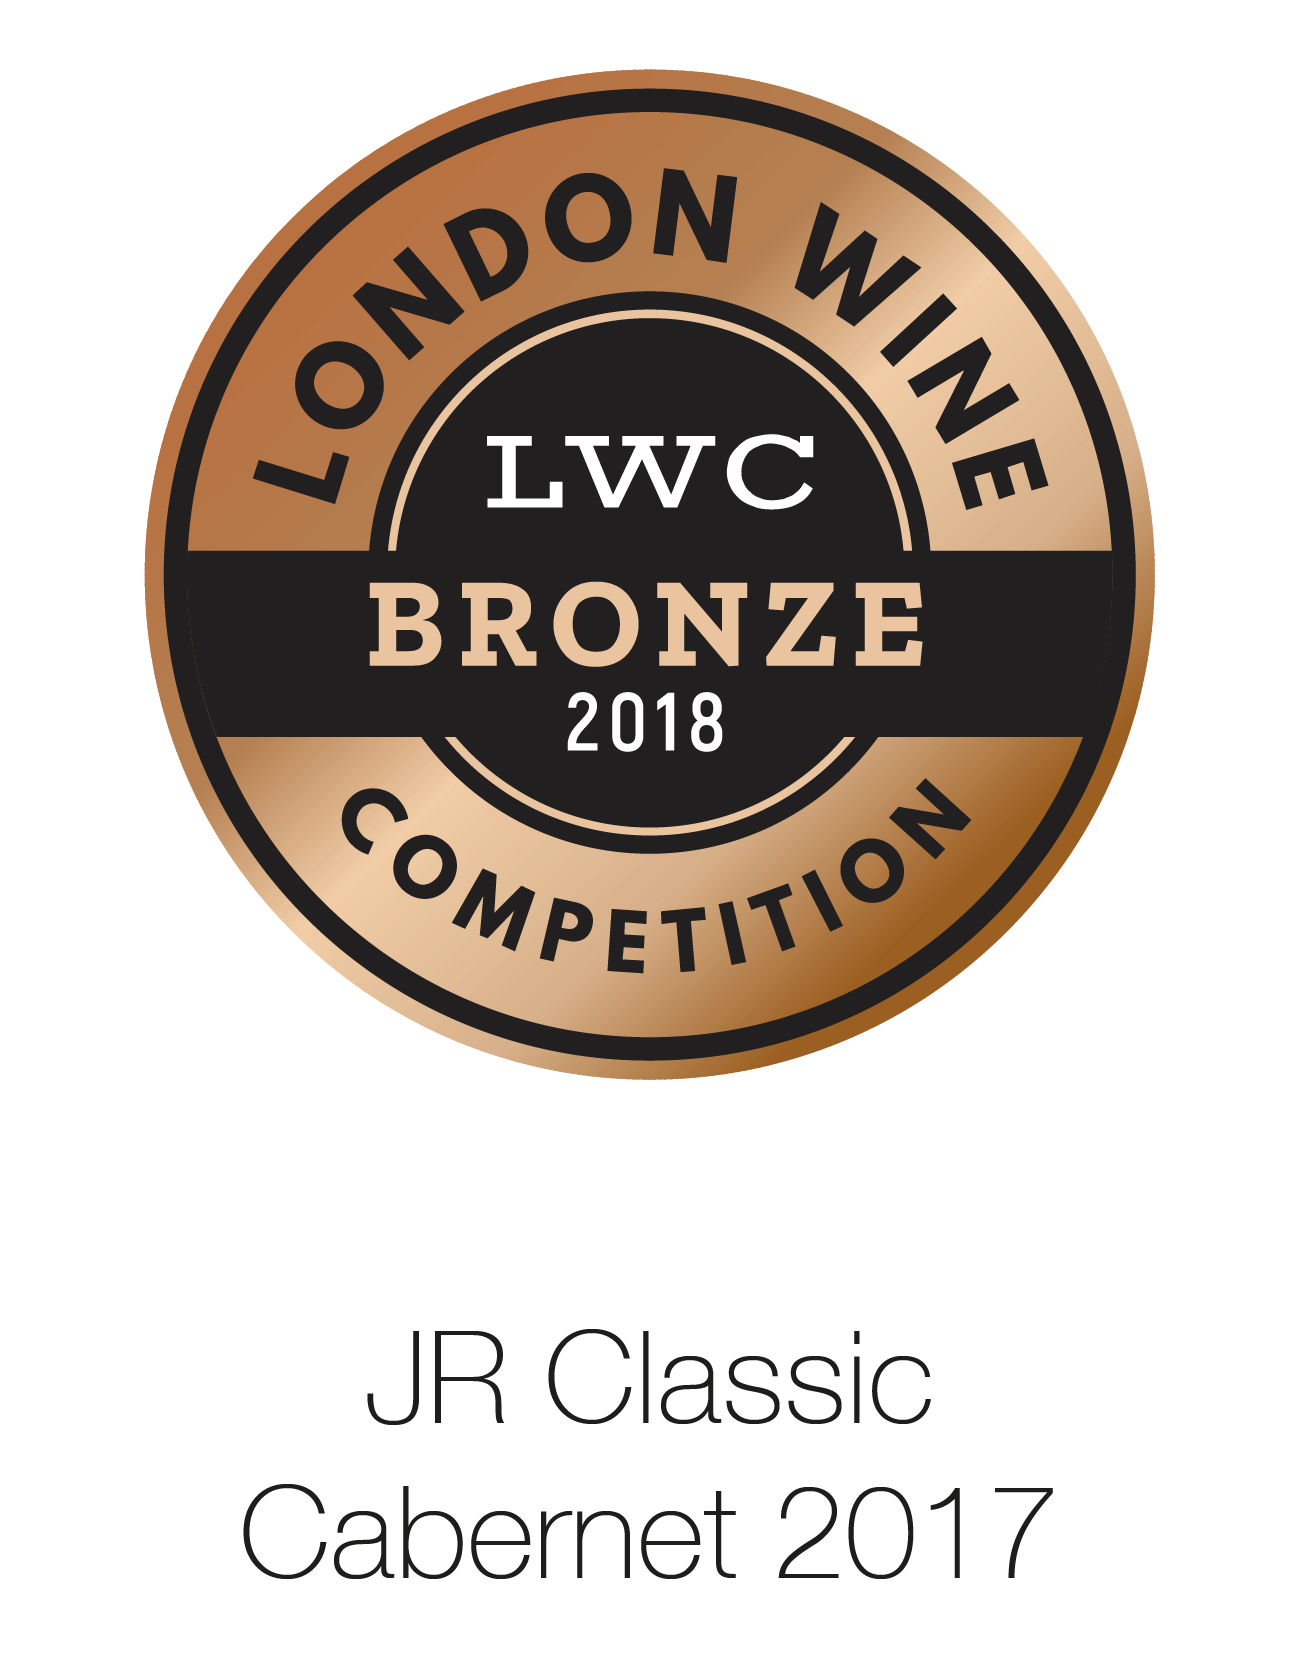 JR Classic - Cabernet Sauvignon 2017 - London Wine Competition 2018